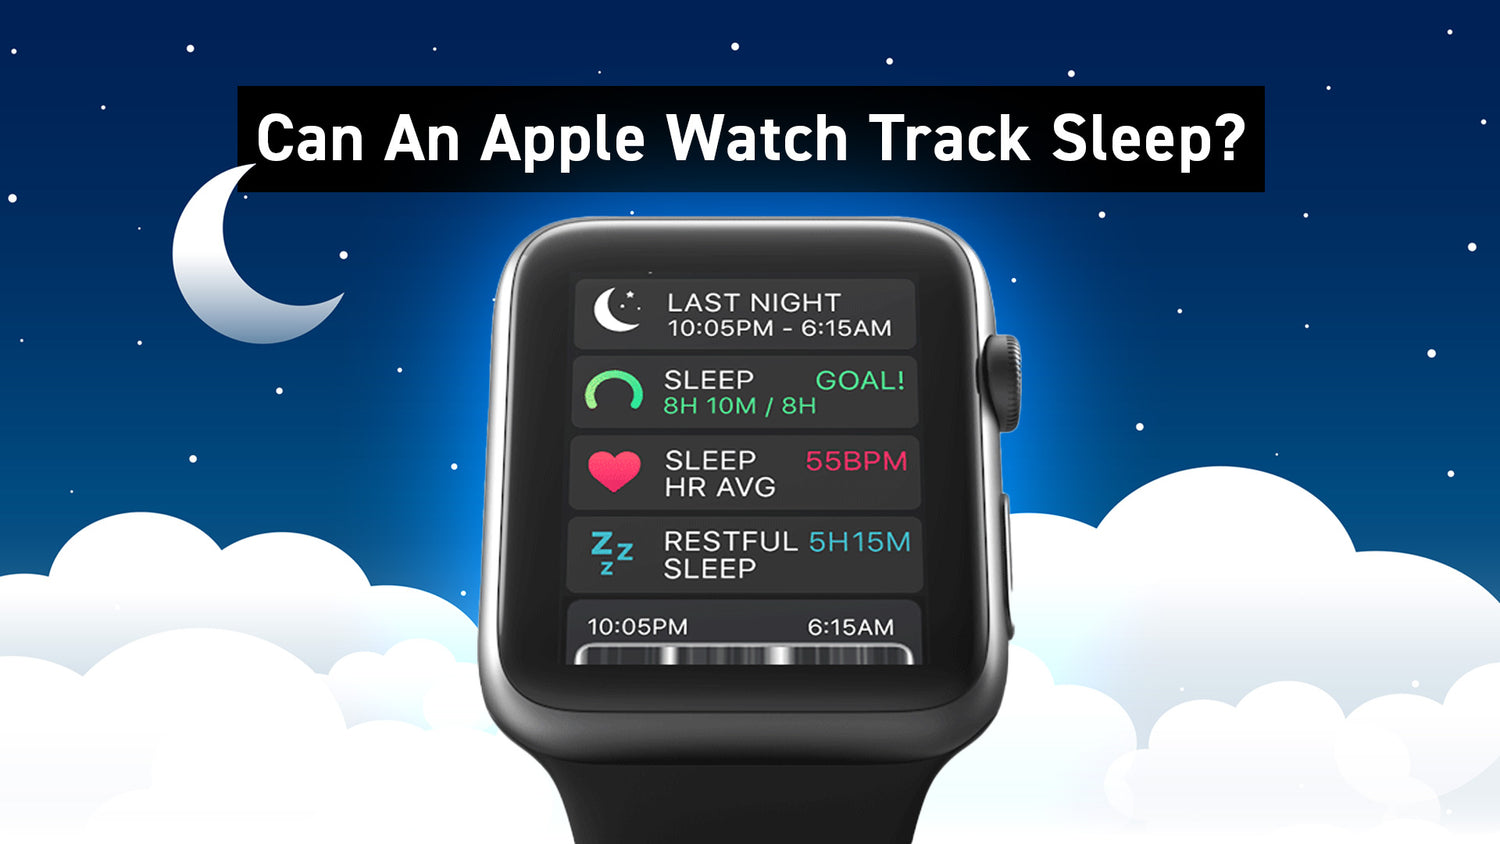 Can an Apple Watch Track Sleep?